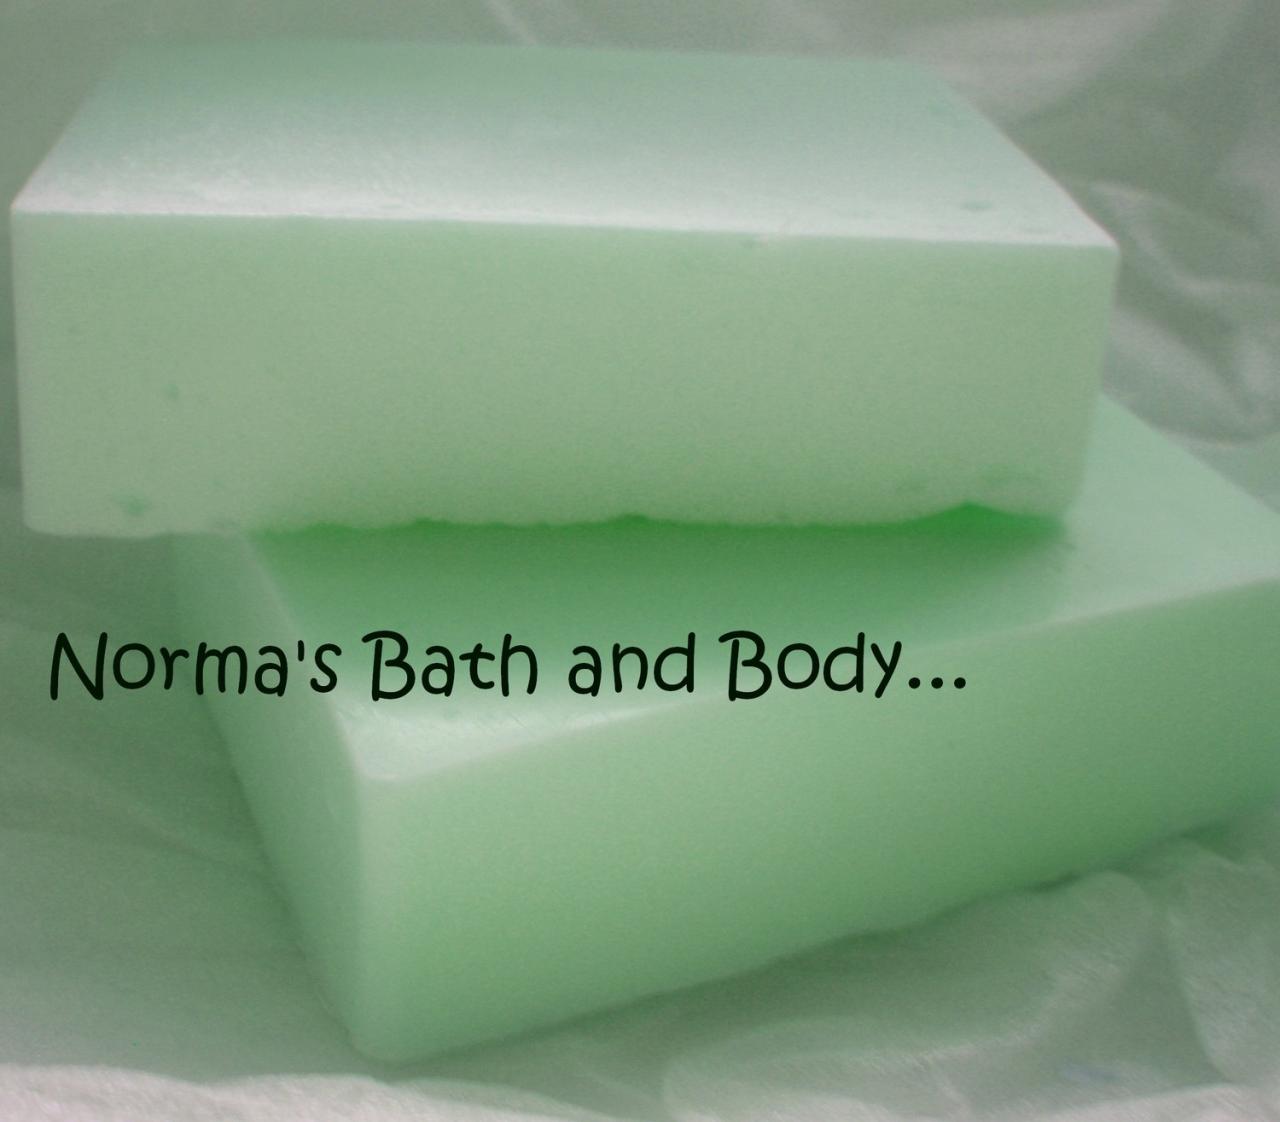 Eucalyptus Mint Glycerin Soap, Soap, Handmade Soap, Glycerin Soap, Beauty, Gifts, Normas Bath